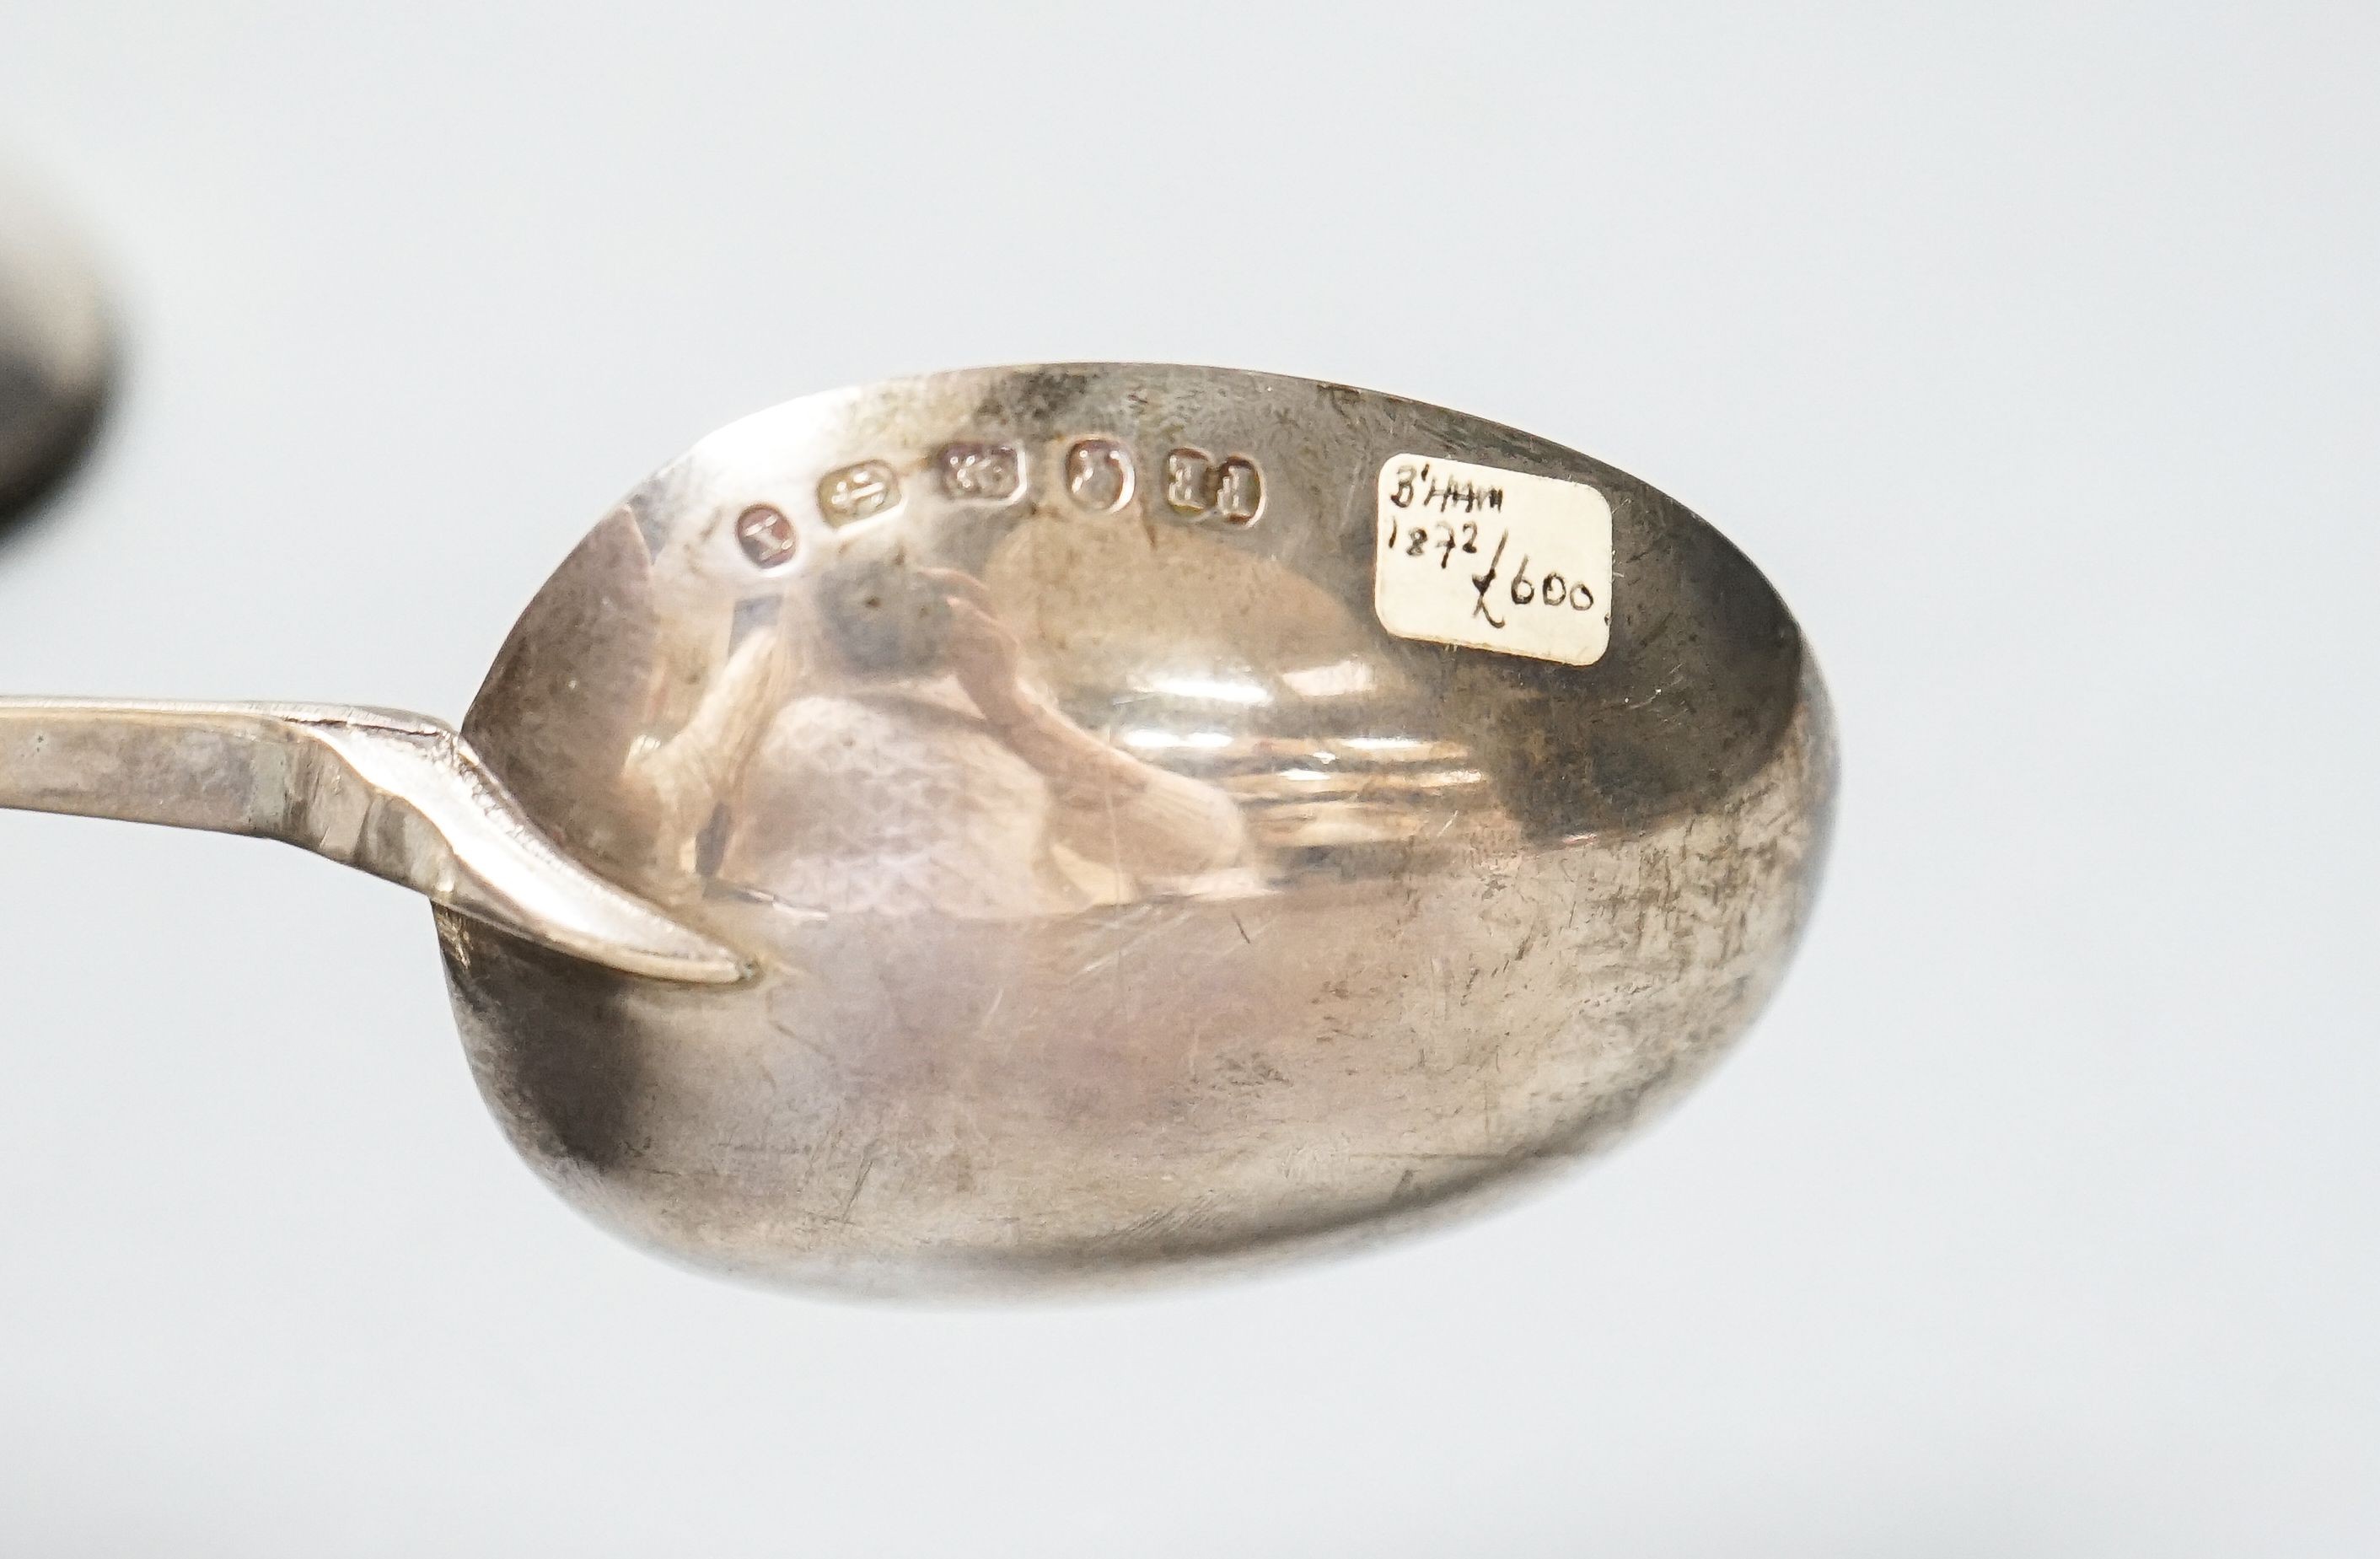 A set of six Victorian silver apostle spoons, Frederick Elkington, Birmingham, 1872, 17.5cm, 9oz.